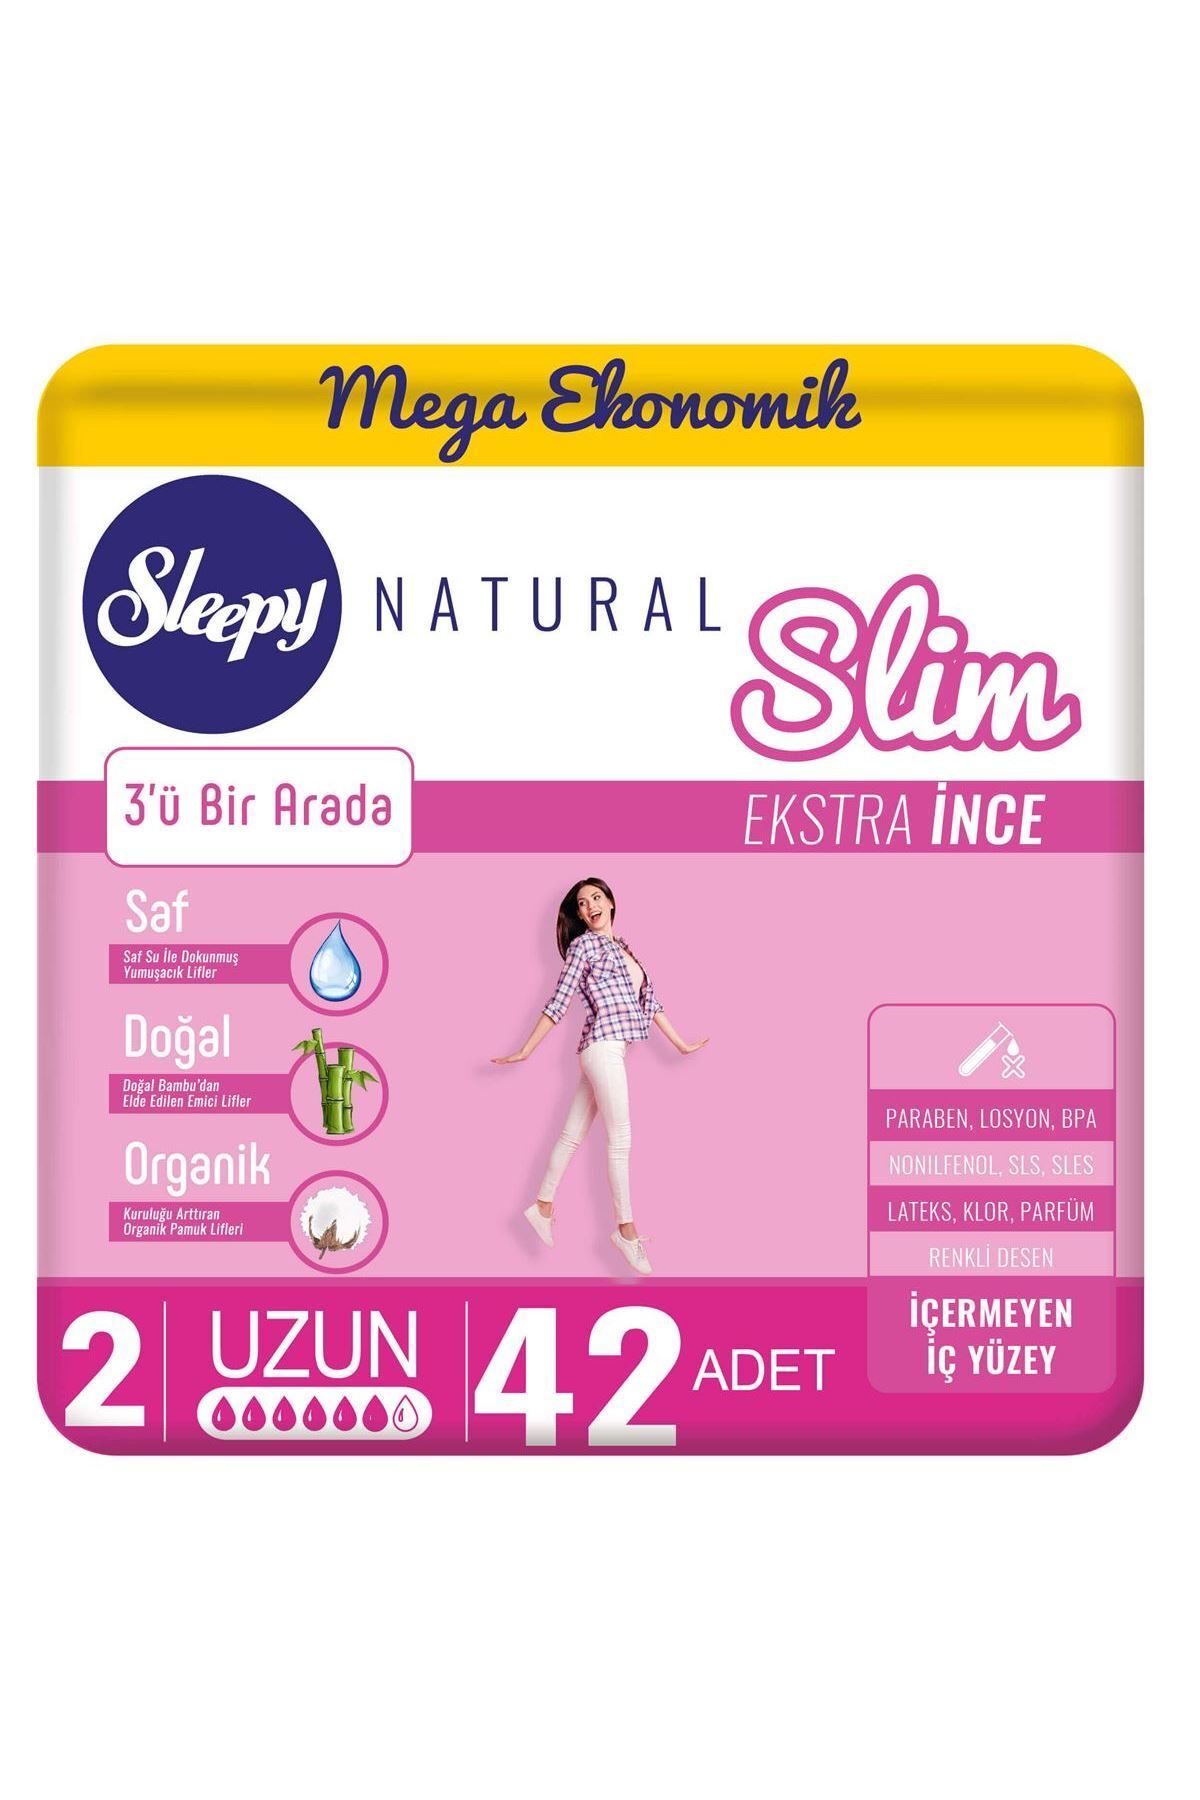 Sleepy Natural Slim Ekstra Ince Uzun (42 PED)